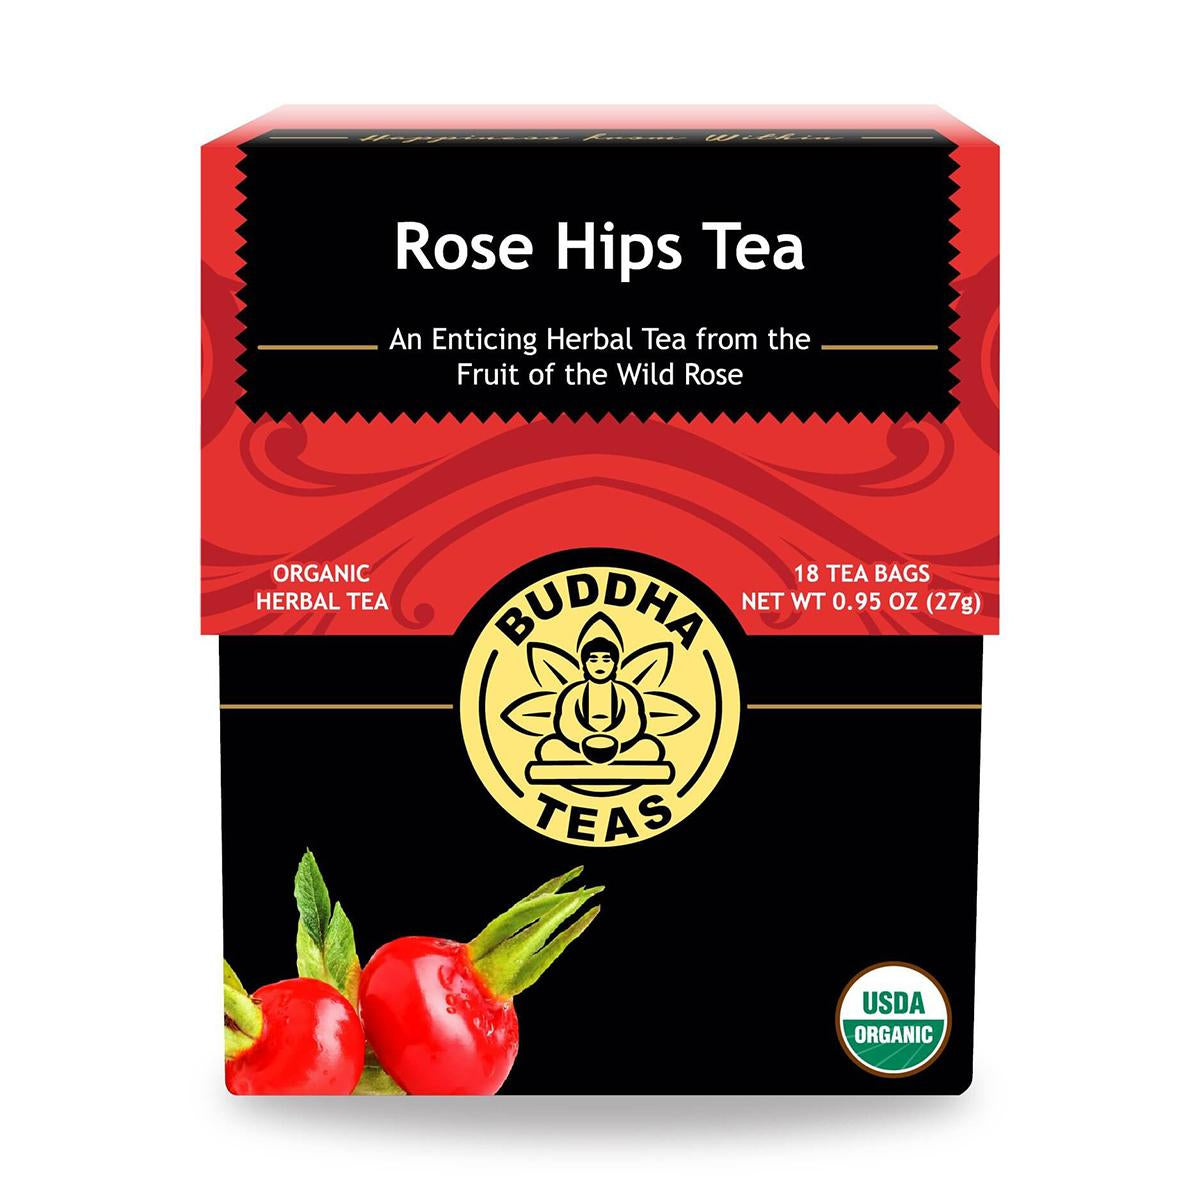 Primary image of Organic Rose Hips Tea